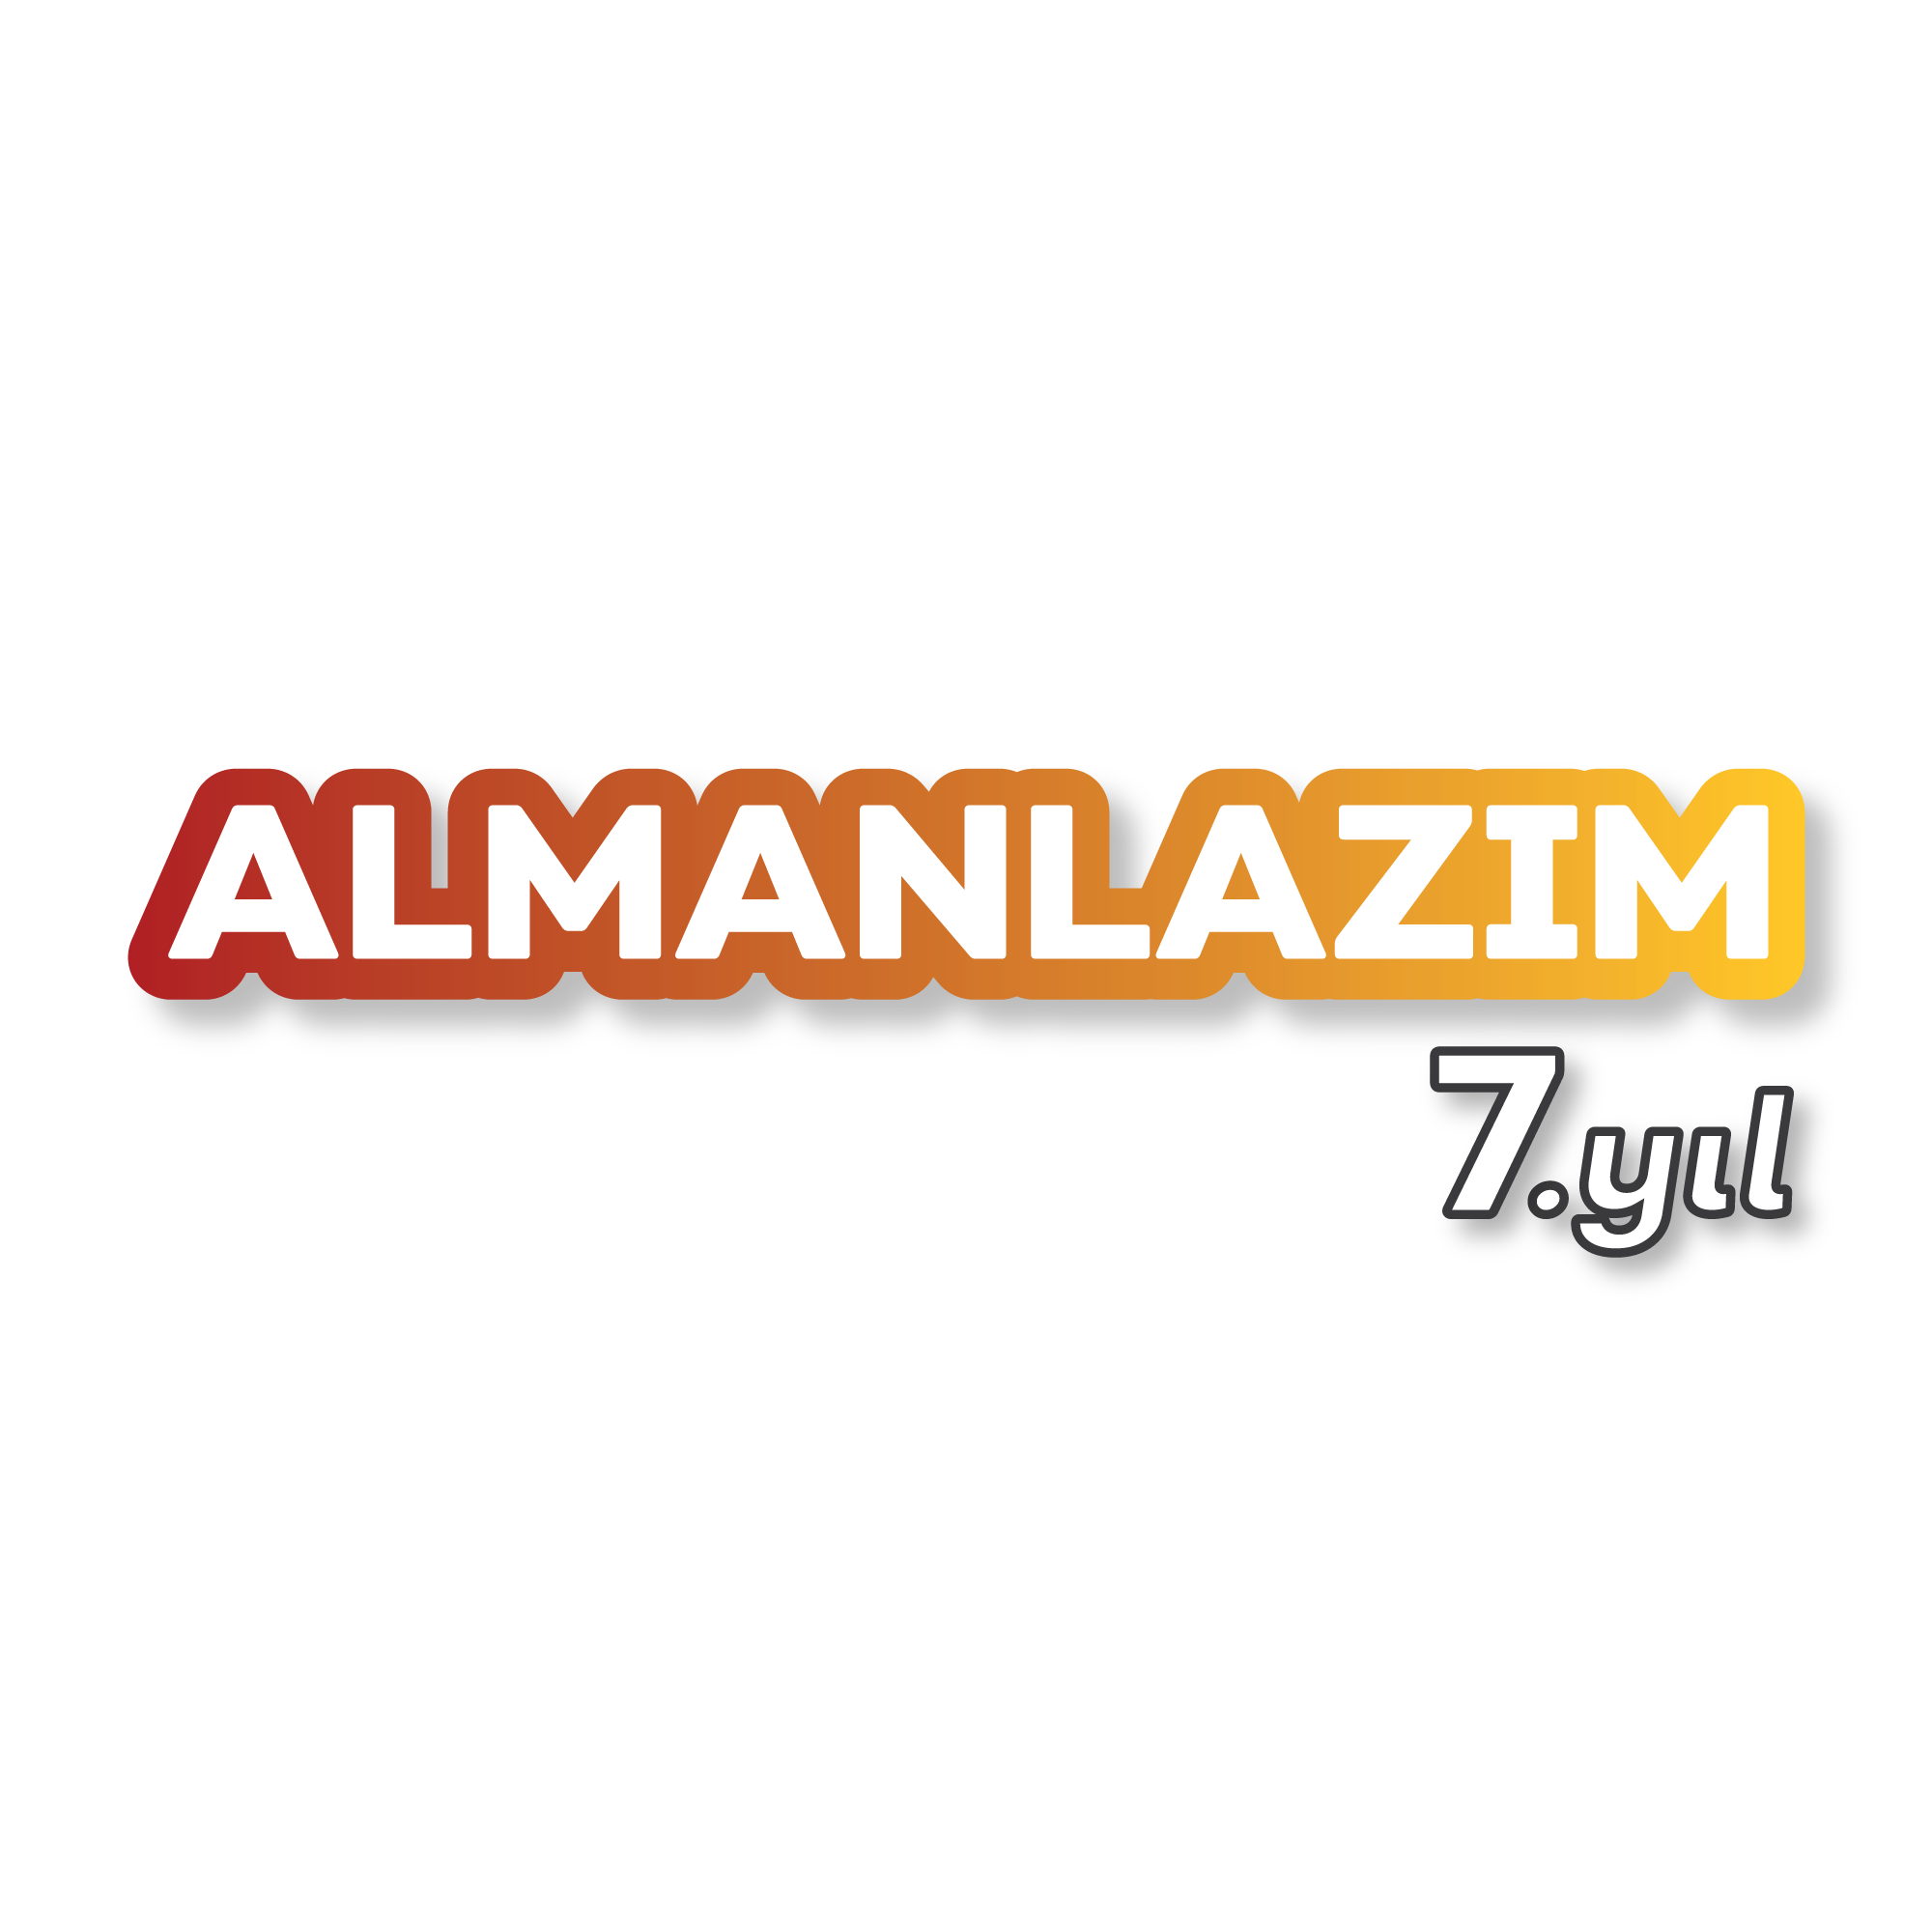 ALMANLAZIM